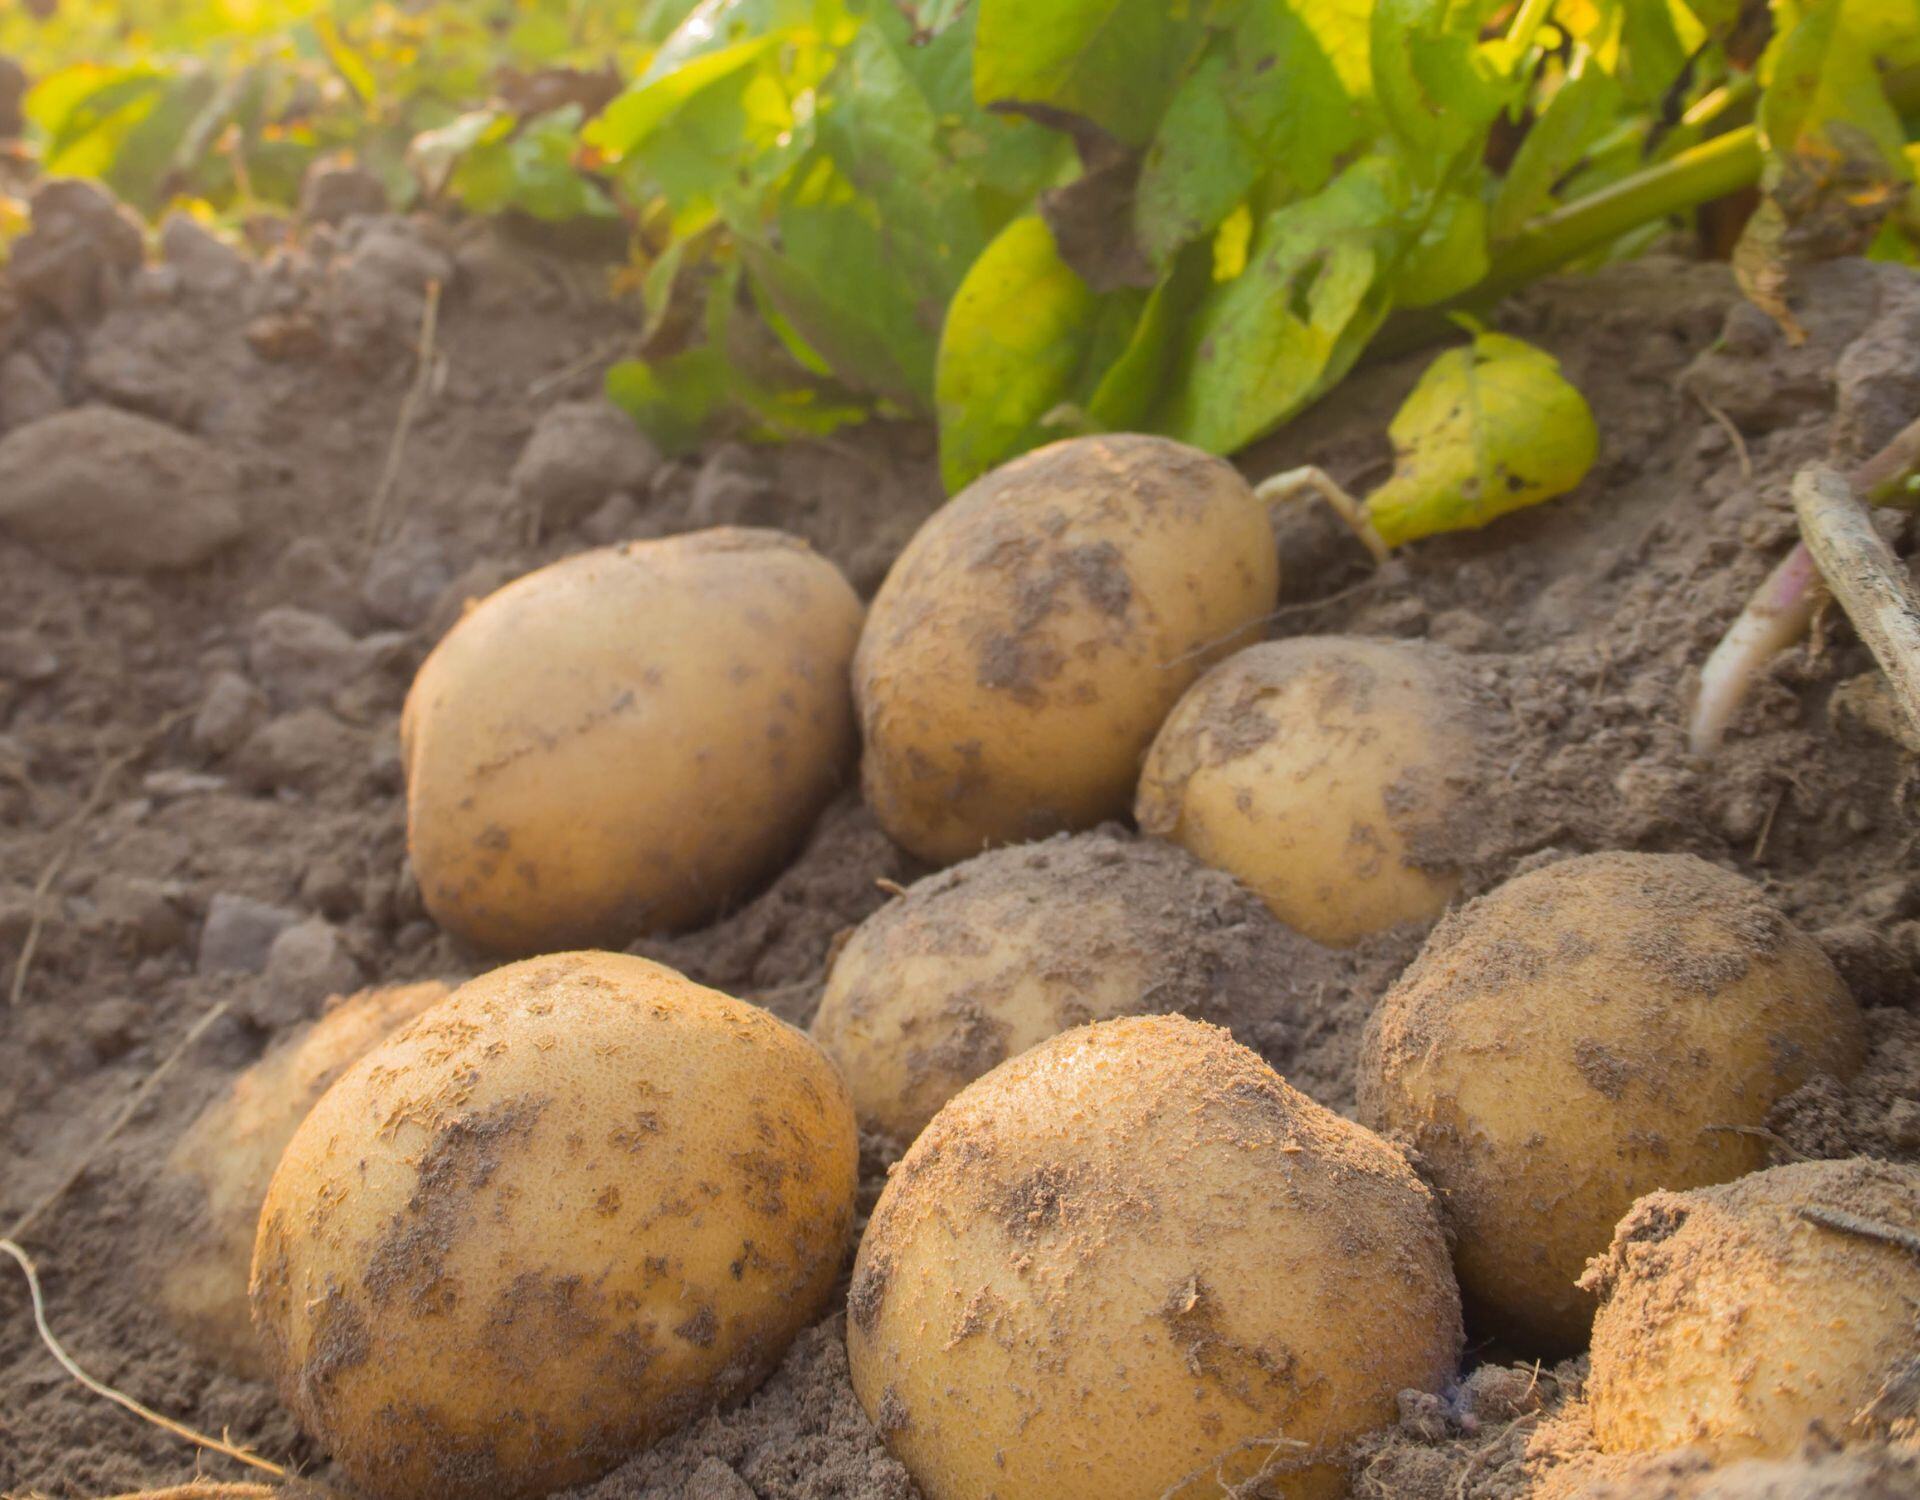 Potato Diseases in Pacific Northwest